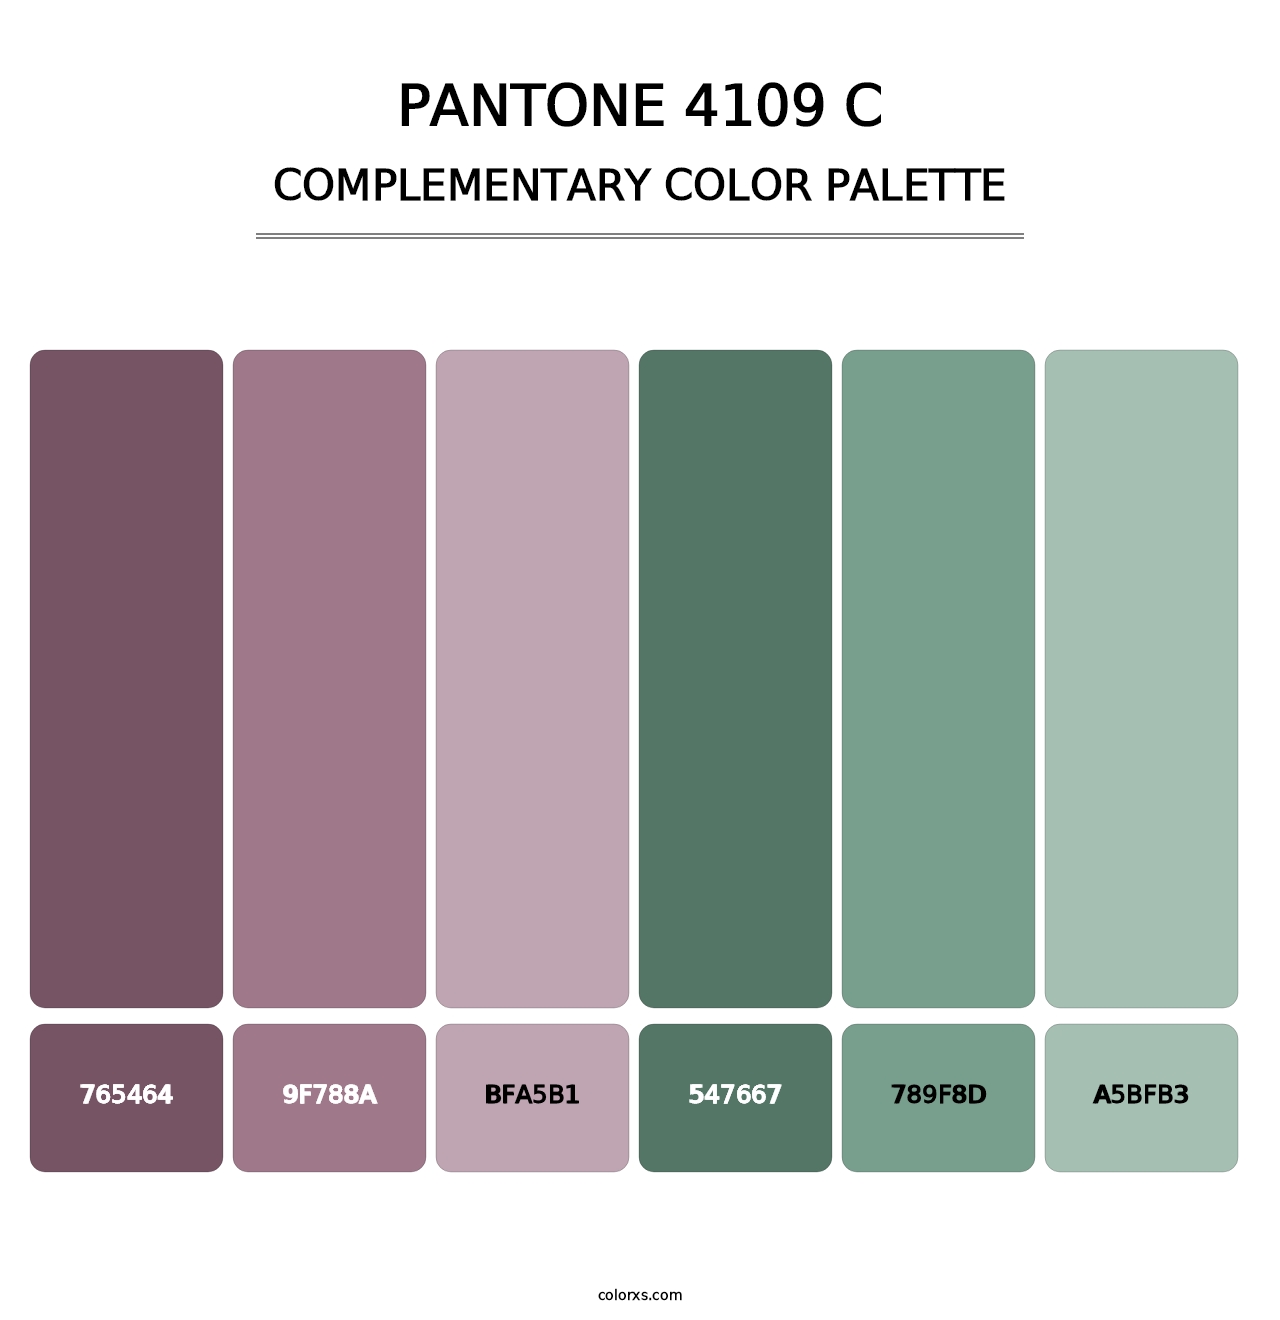 PANTONE 4109 C - Complementary Color Palette